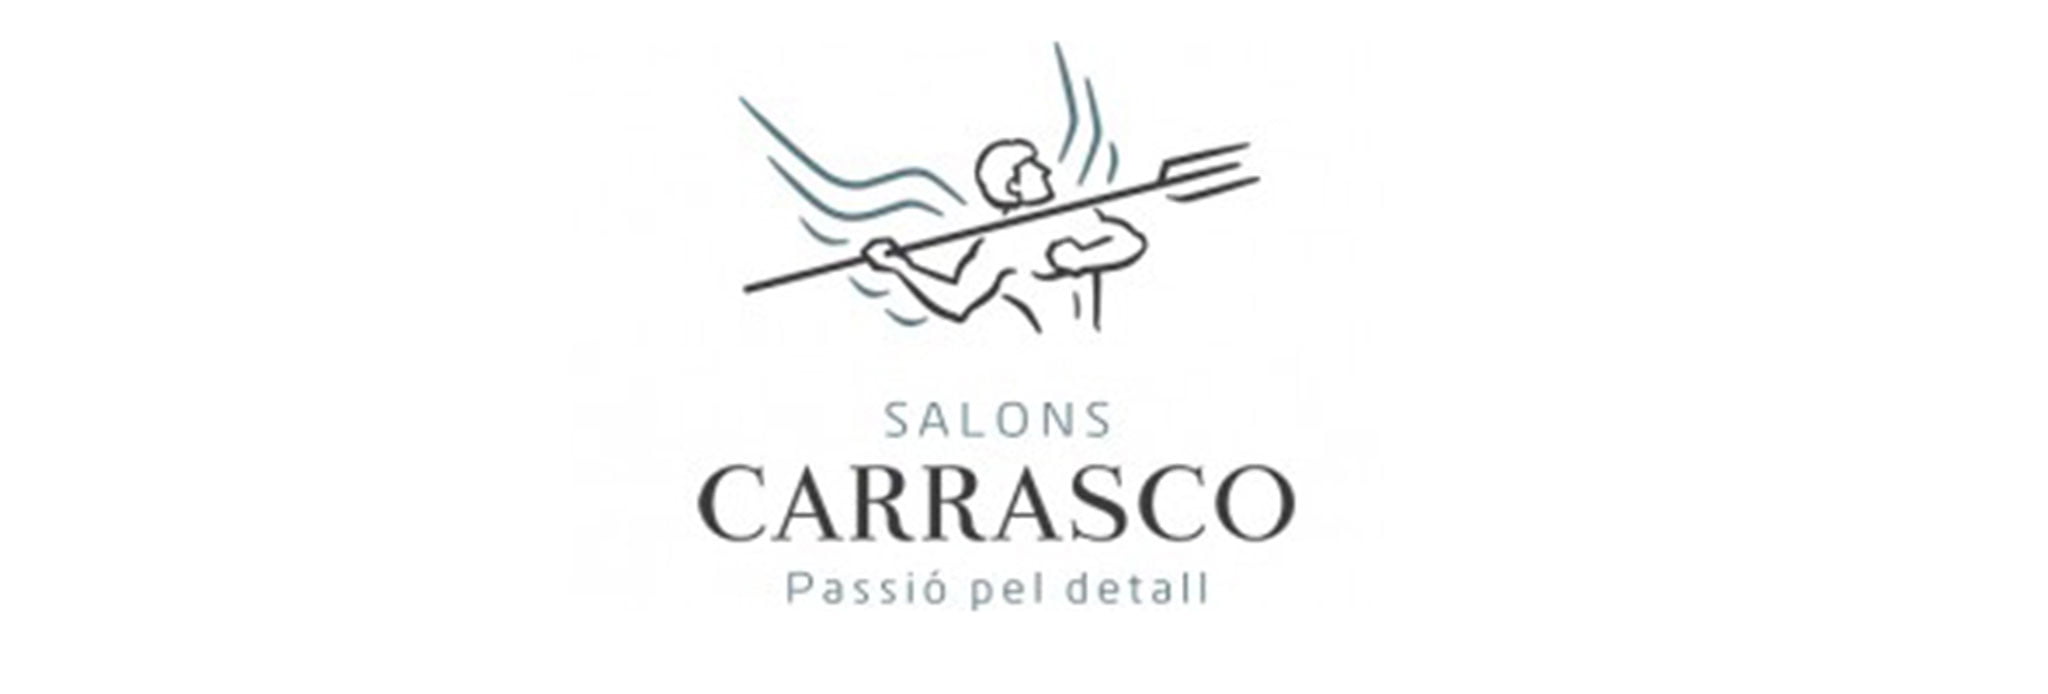 Logotipo Salones Carrasco